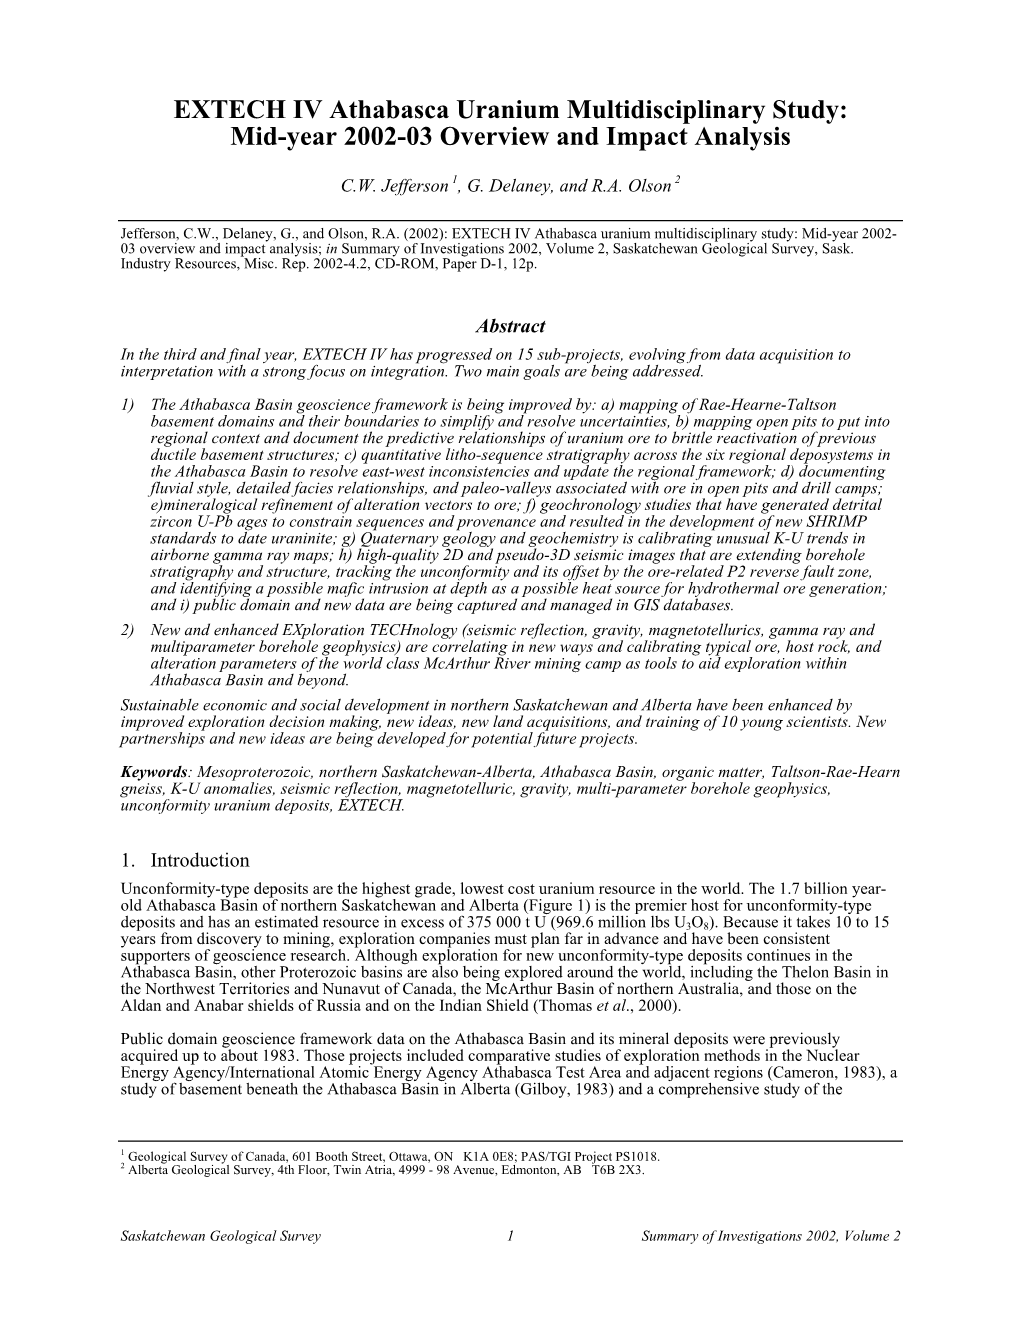 EXTECH IV Athabasca Uranium Multidisciplinary Study: Mid-Year 2002-03 Overview and Impact Analysis